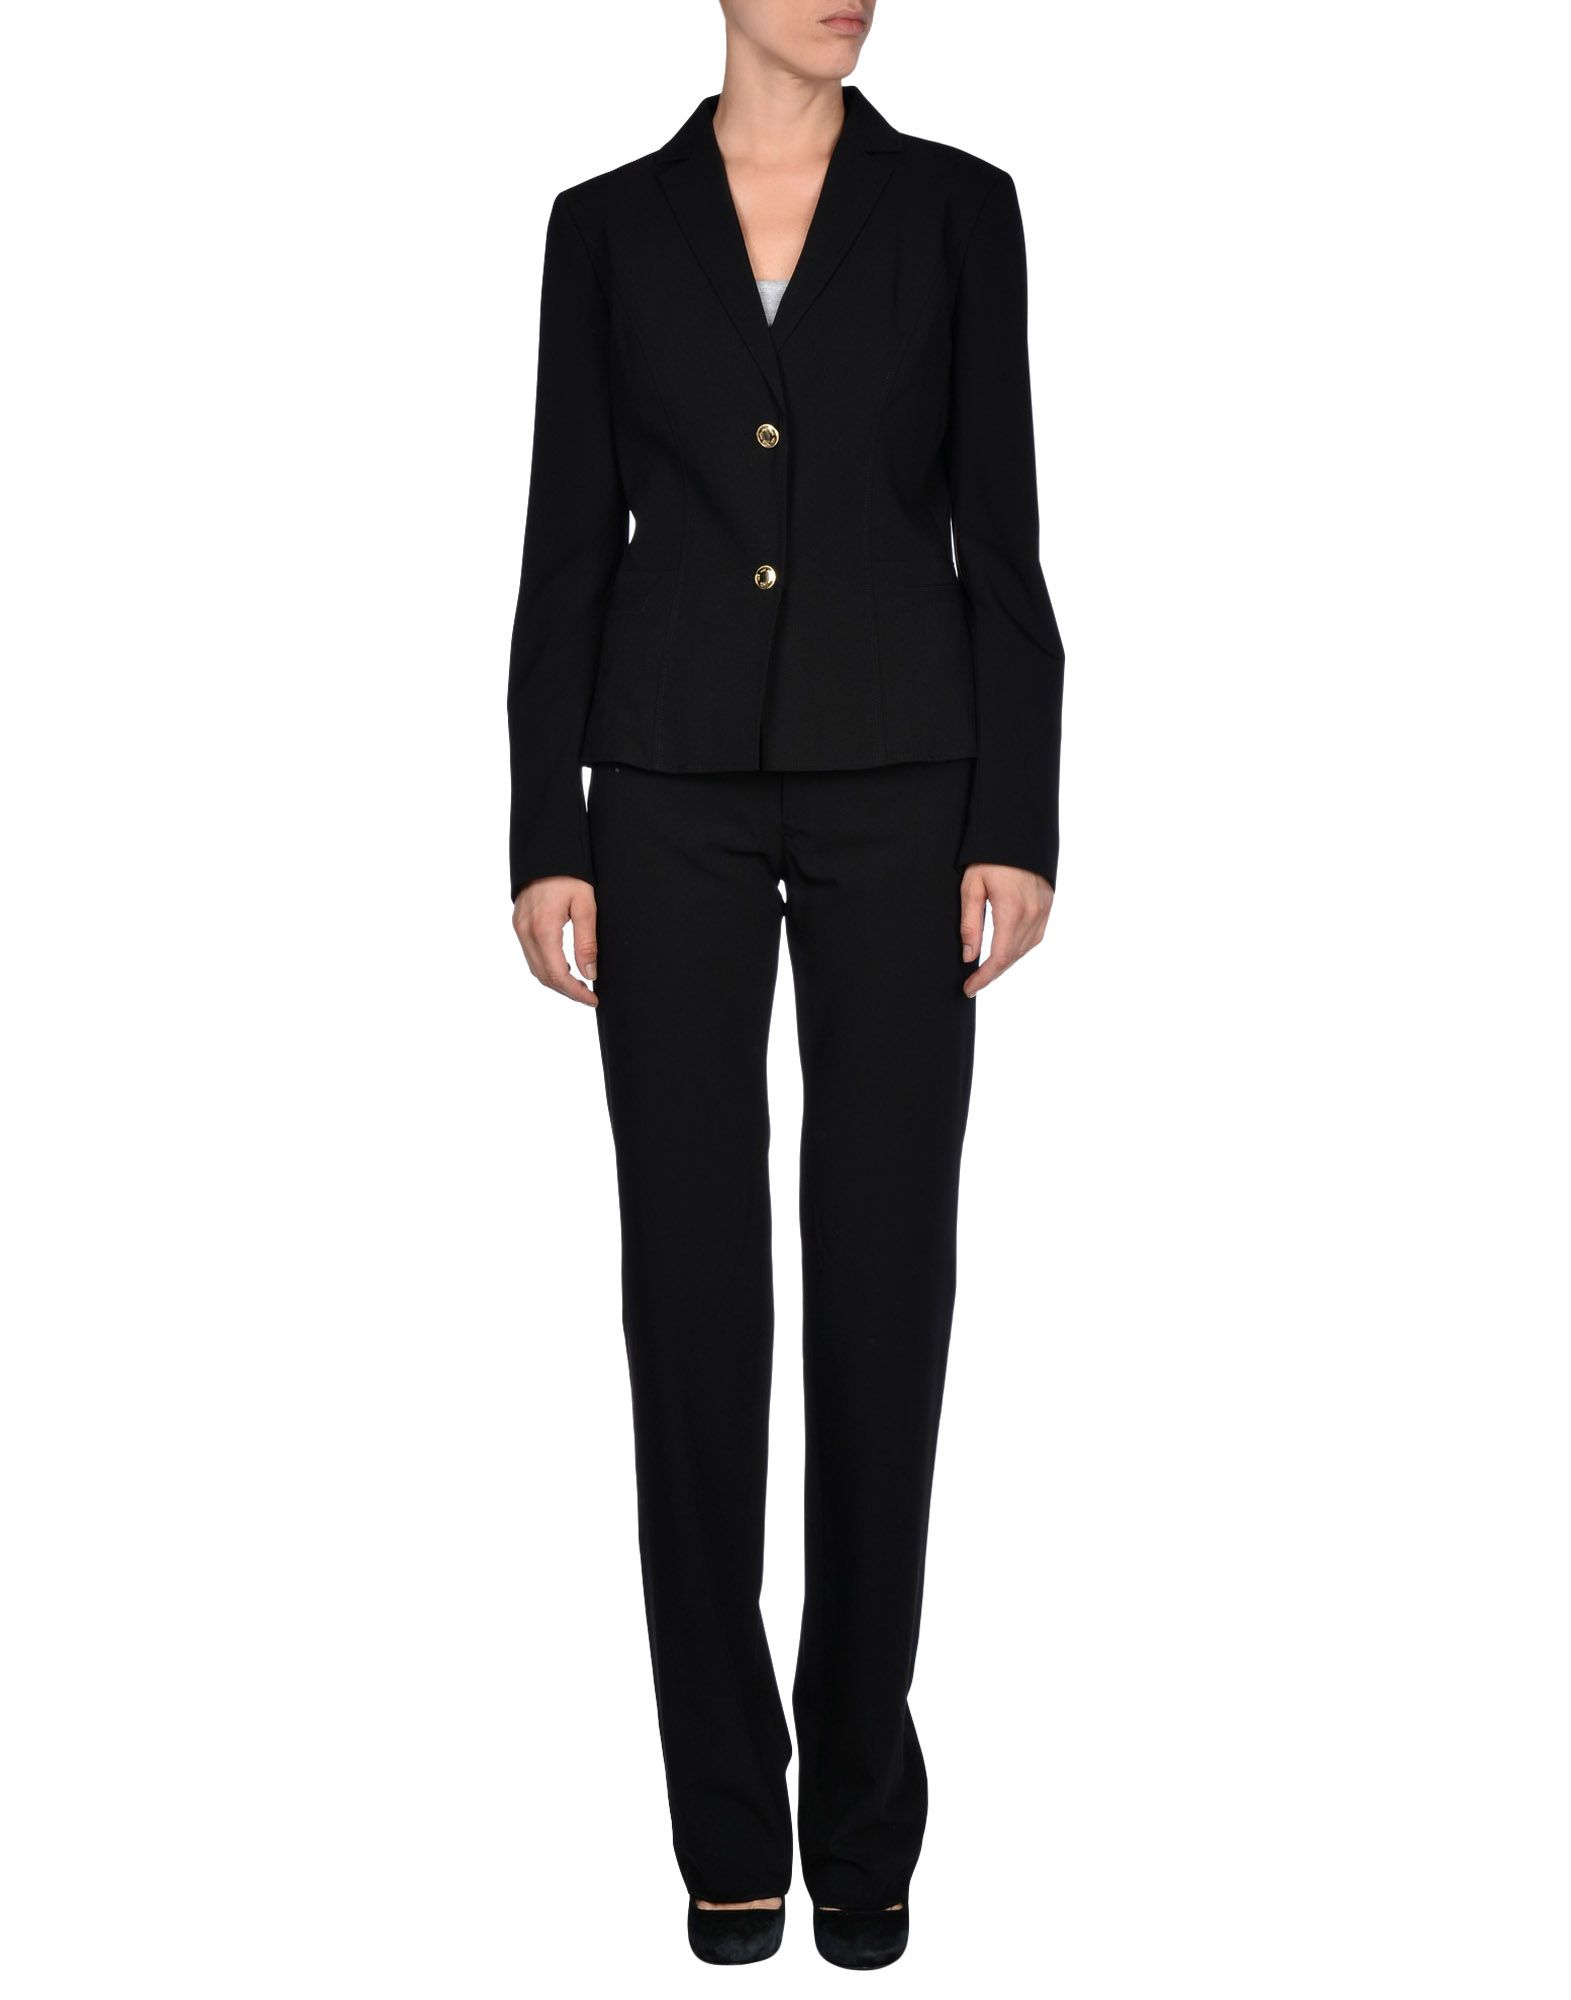 Lyst - Versace Jeans Women's Suit in Black